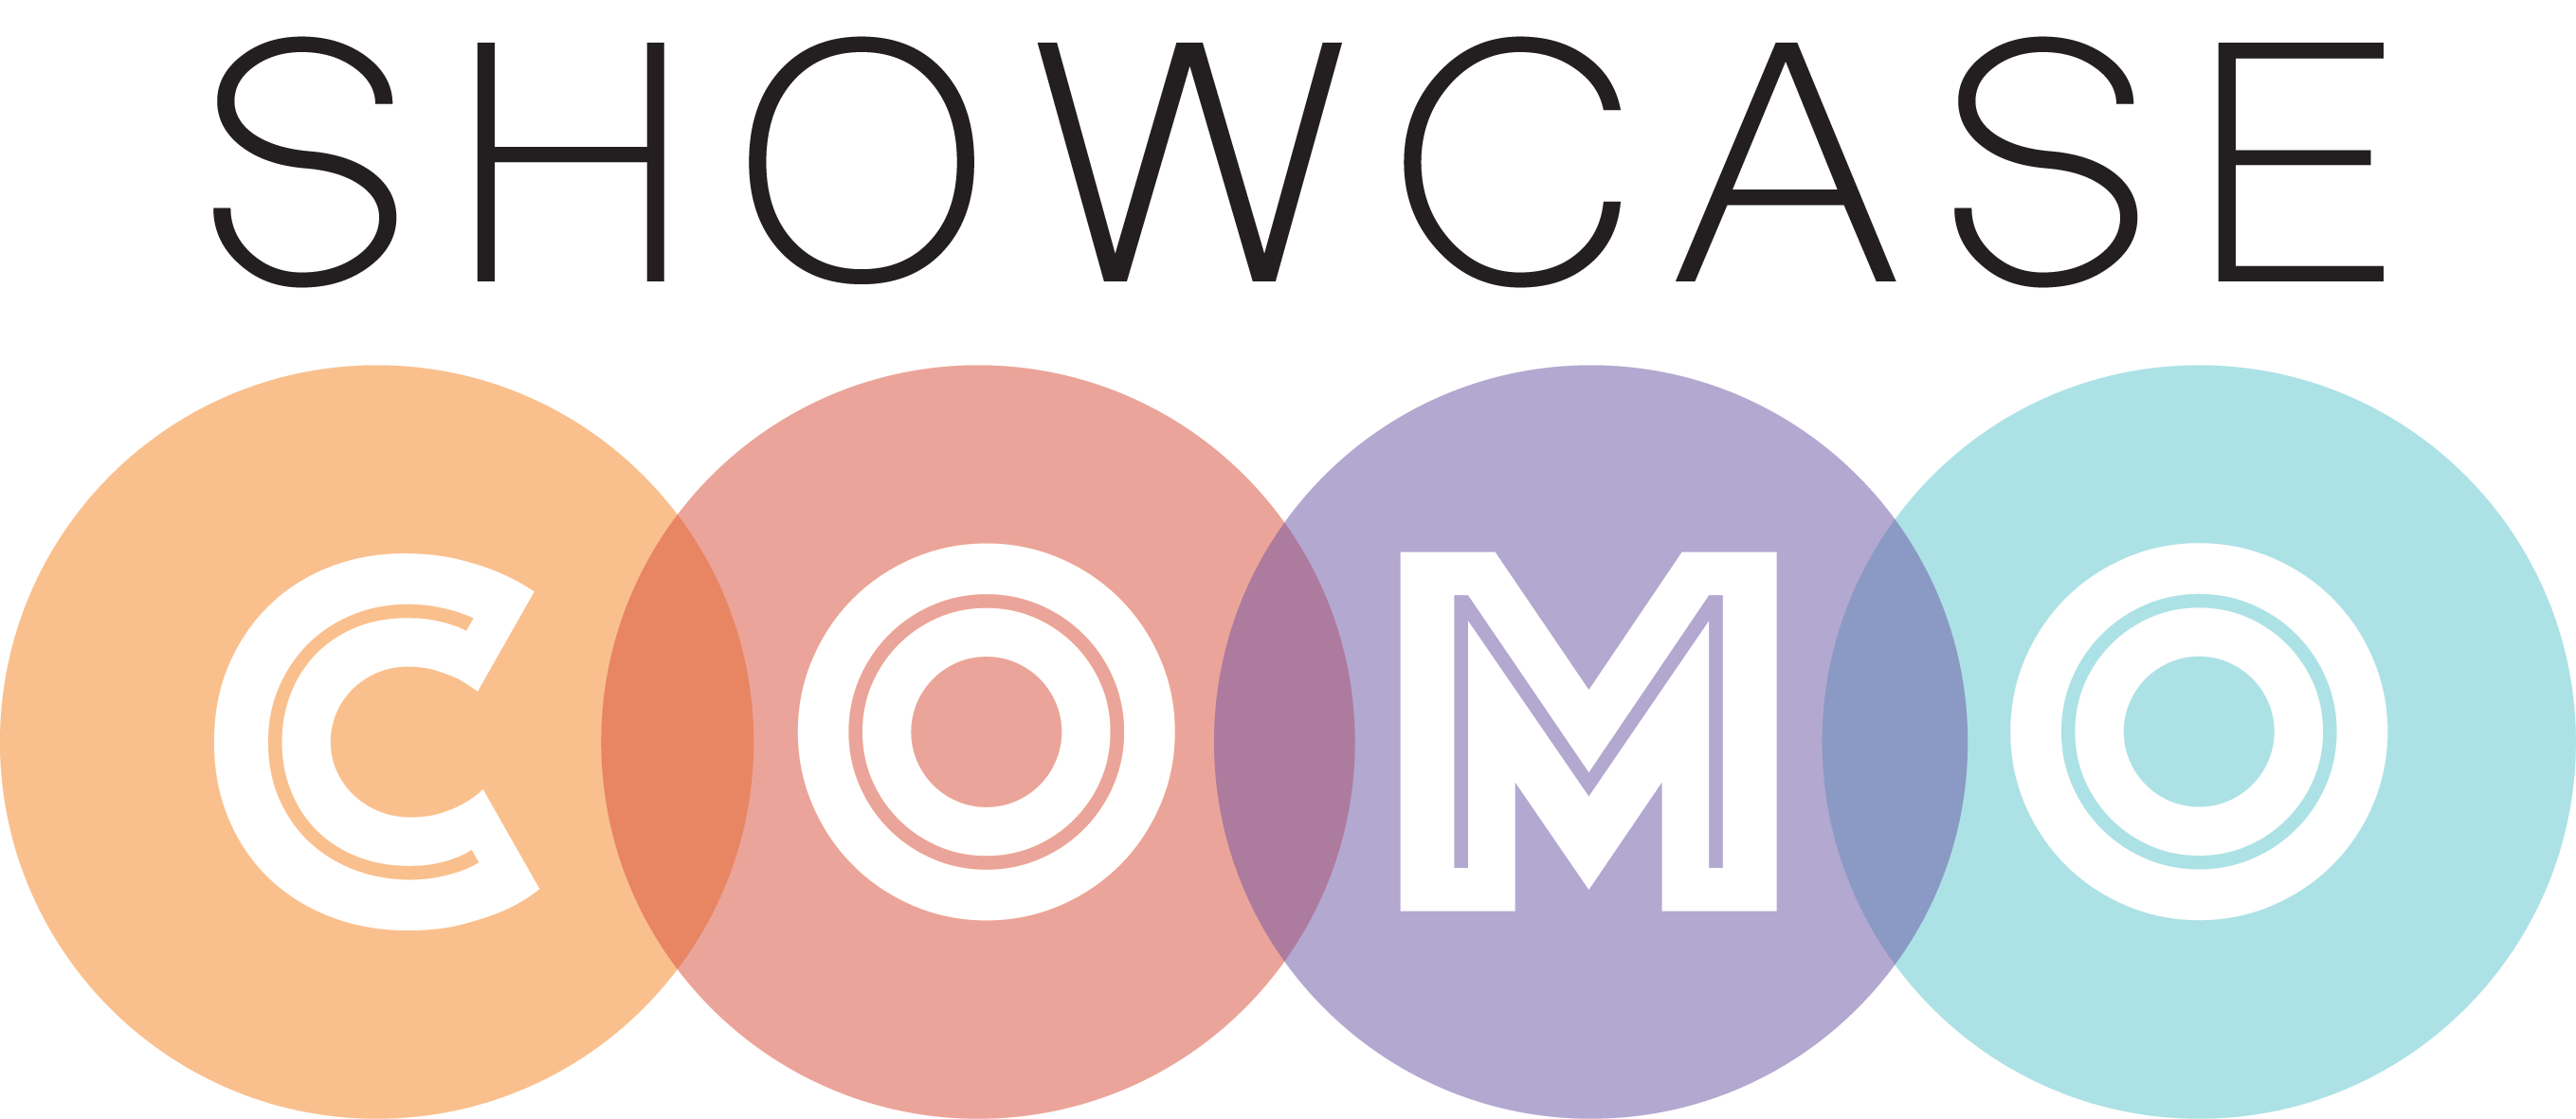 Como Logo - Showcase CoMo Logo, Missouri Chamber of Commerce